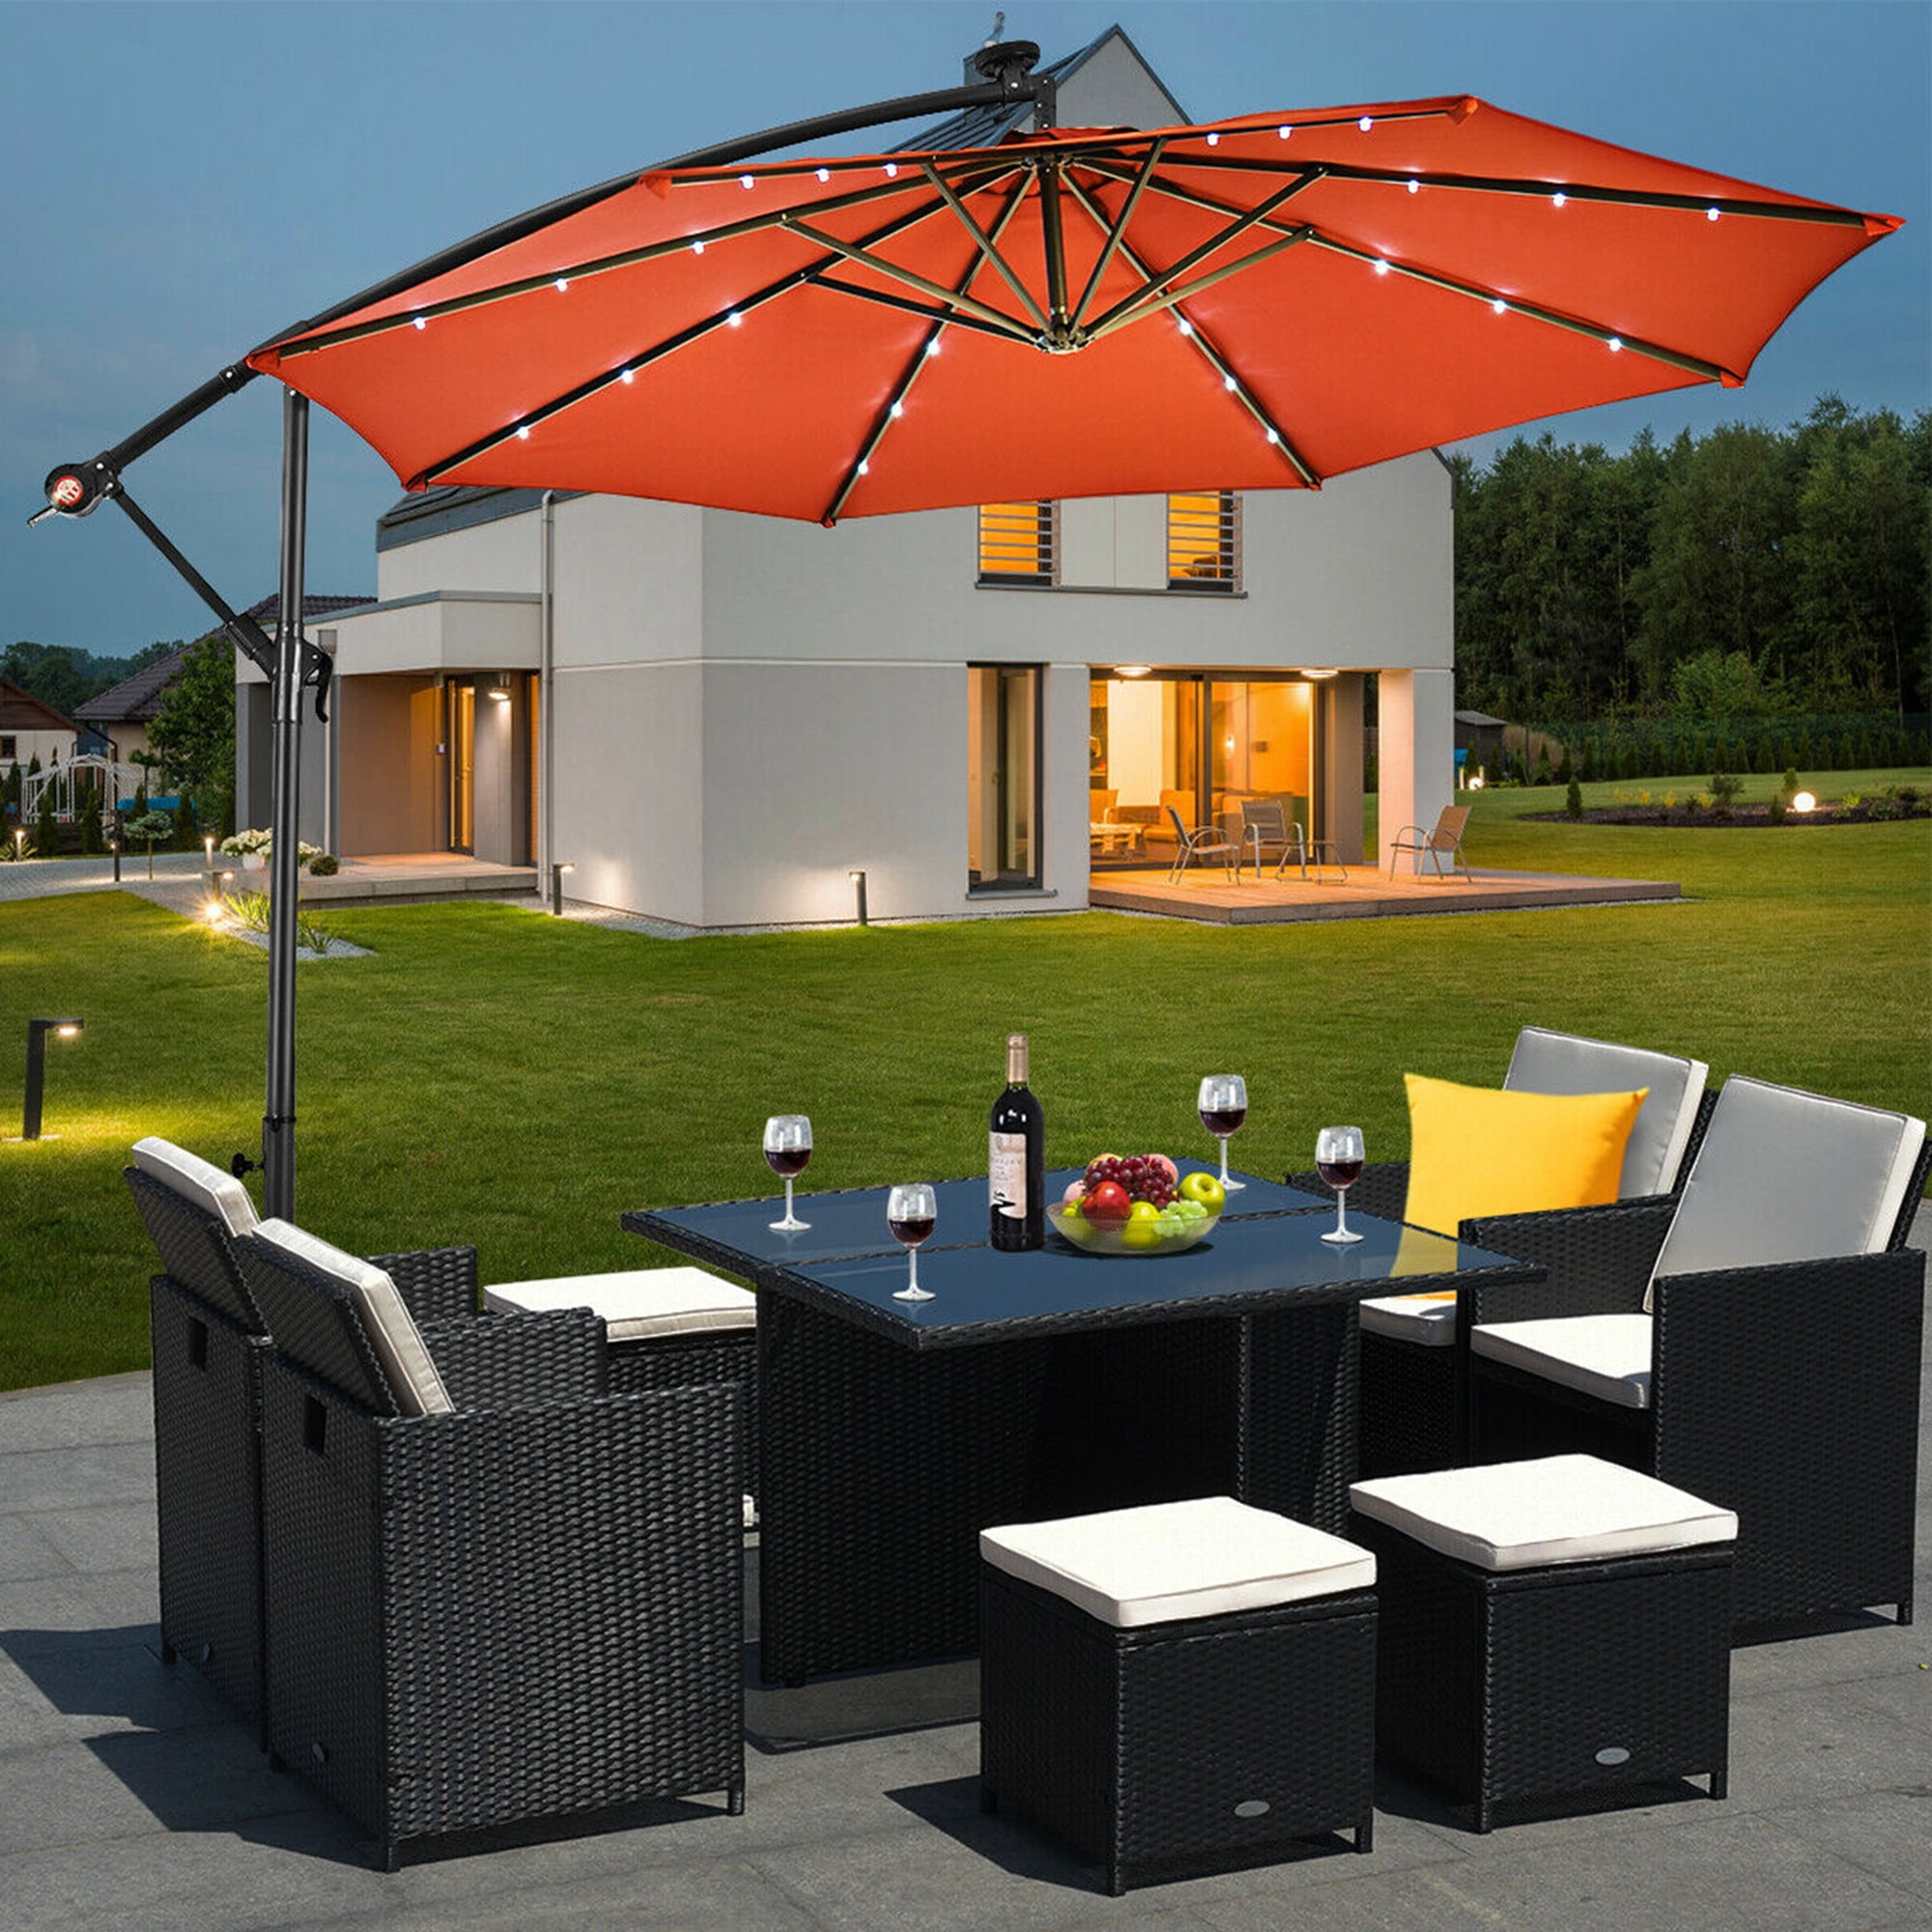 Gymax 10Ft Patio Solar LED Outdoor Offset Hanging Umbrella w/ 24 Lights Orange